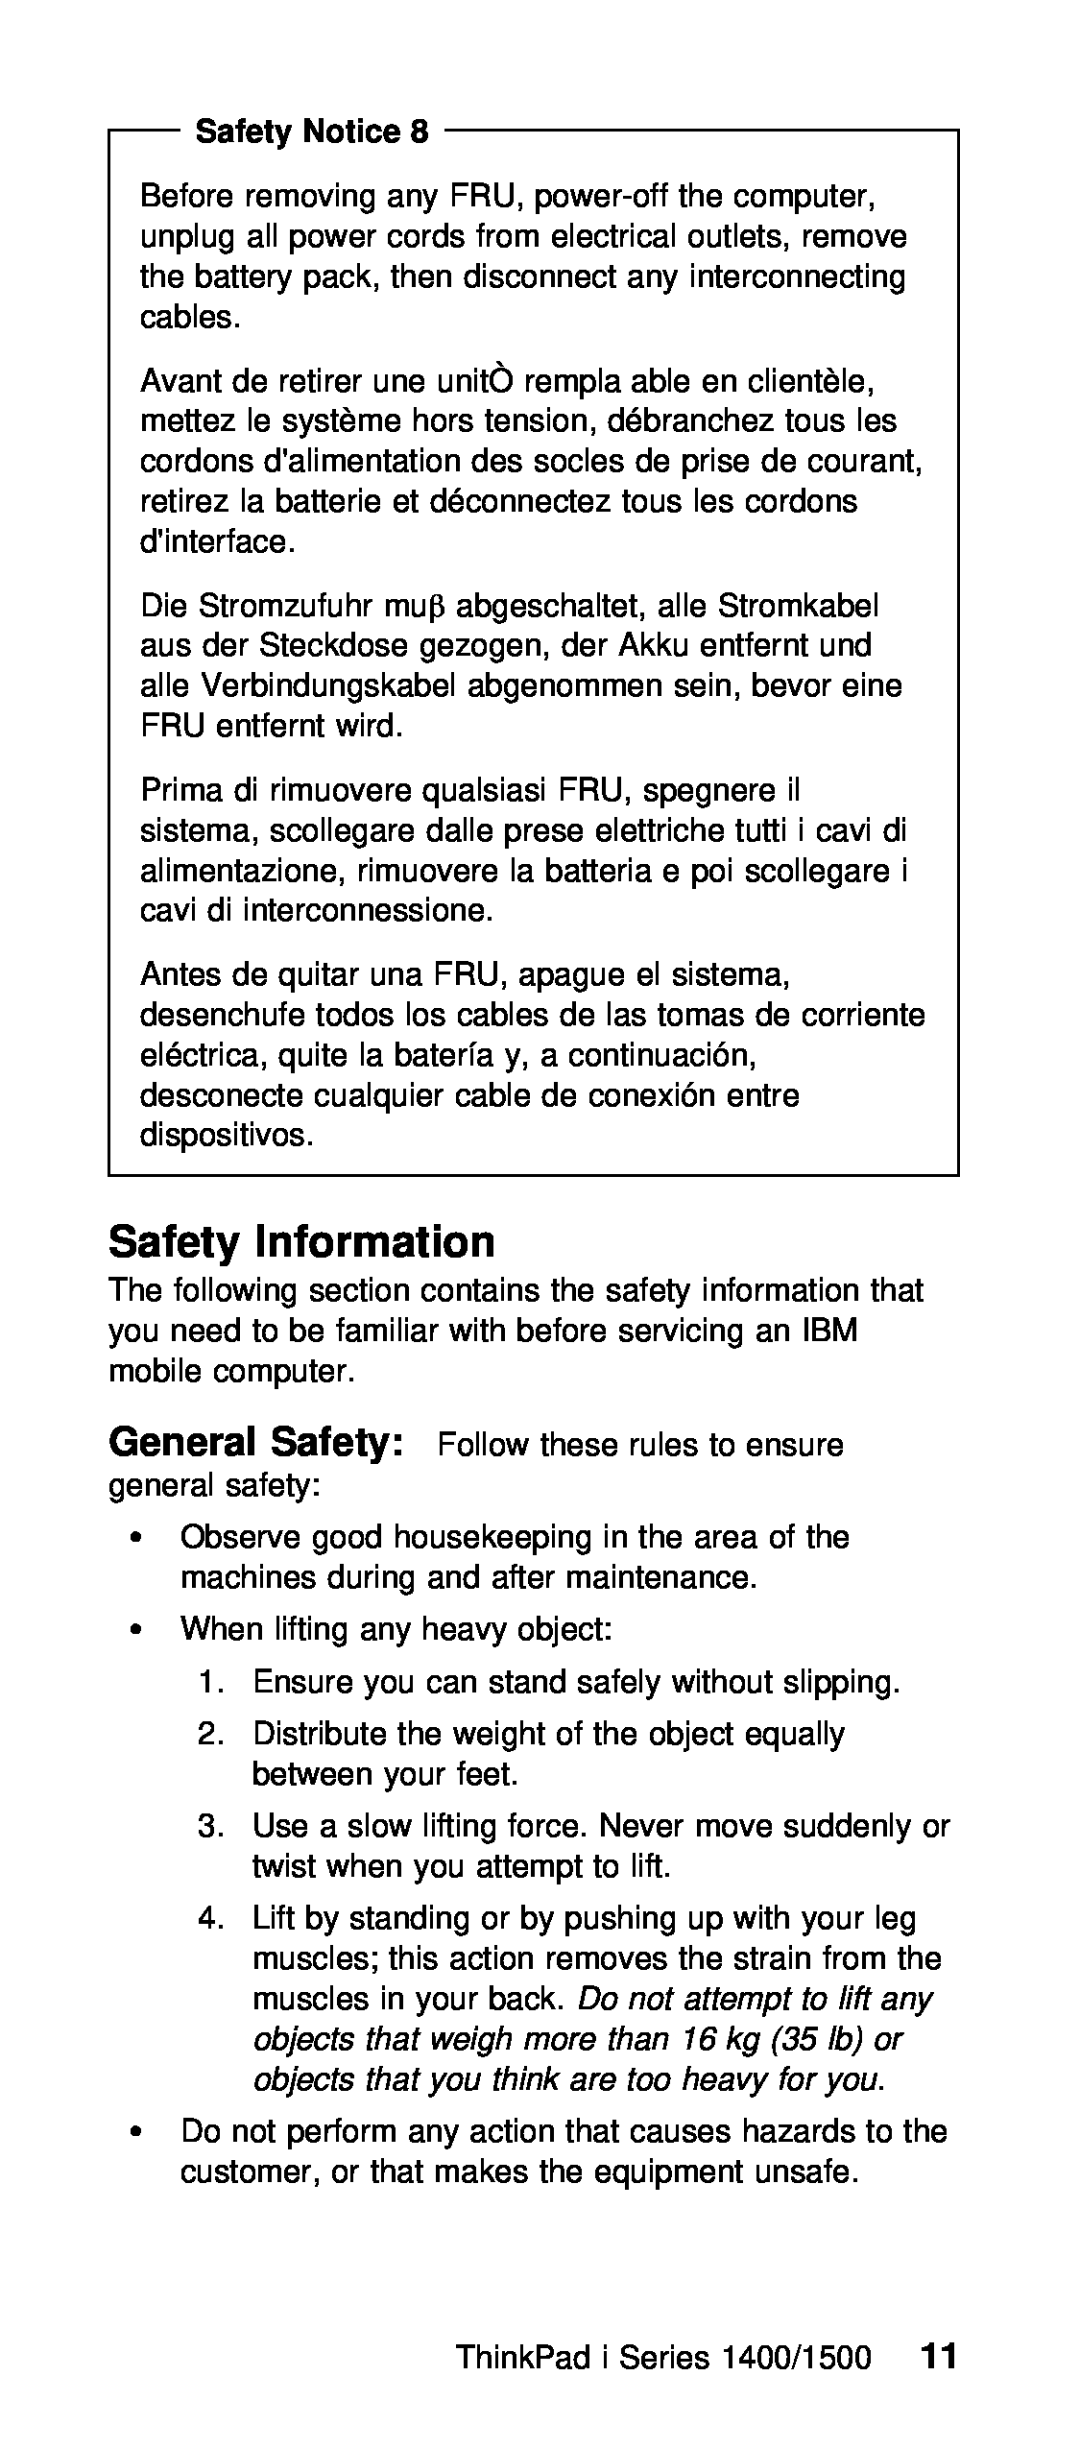 IBM Series 1400, Series 1500 manual Safety Information, Safety Notice 